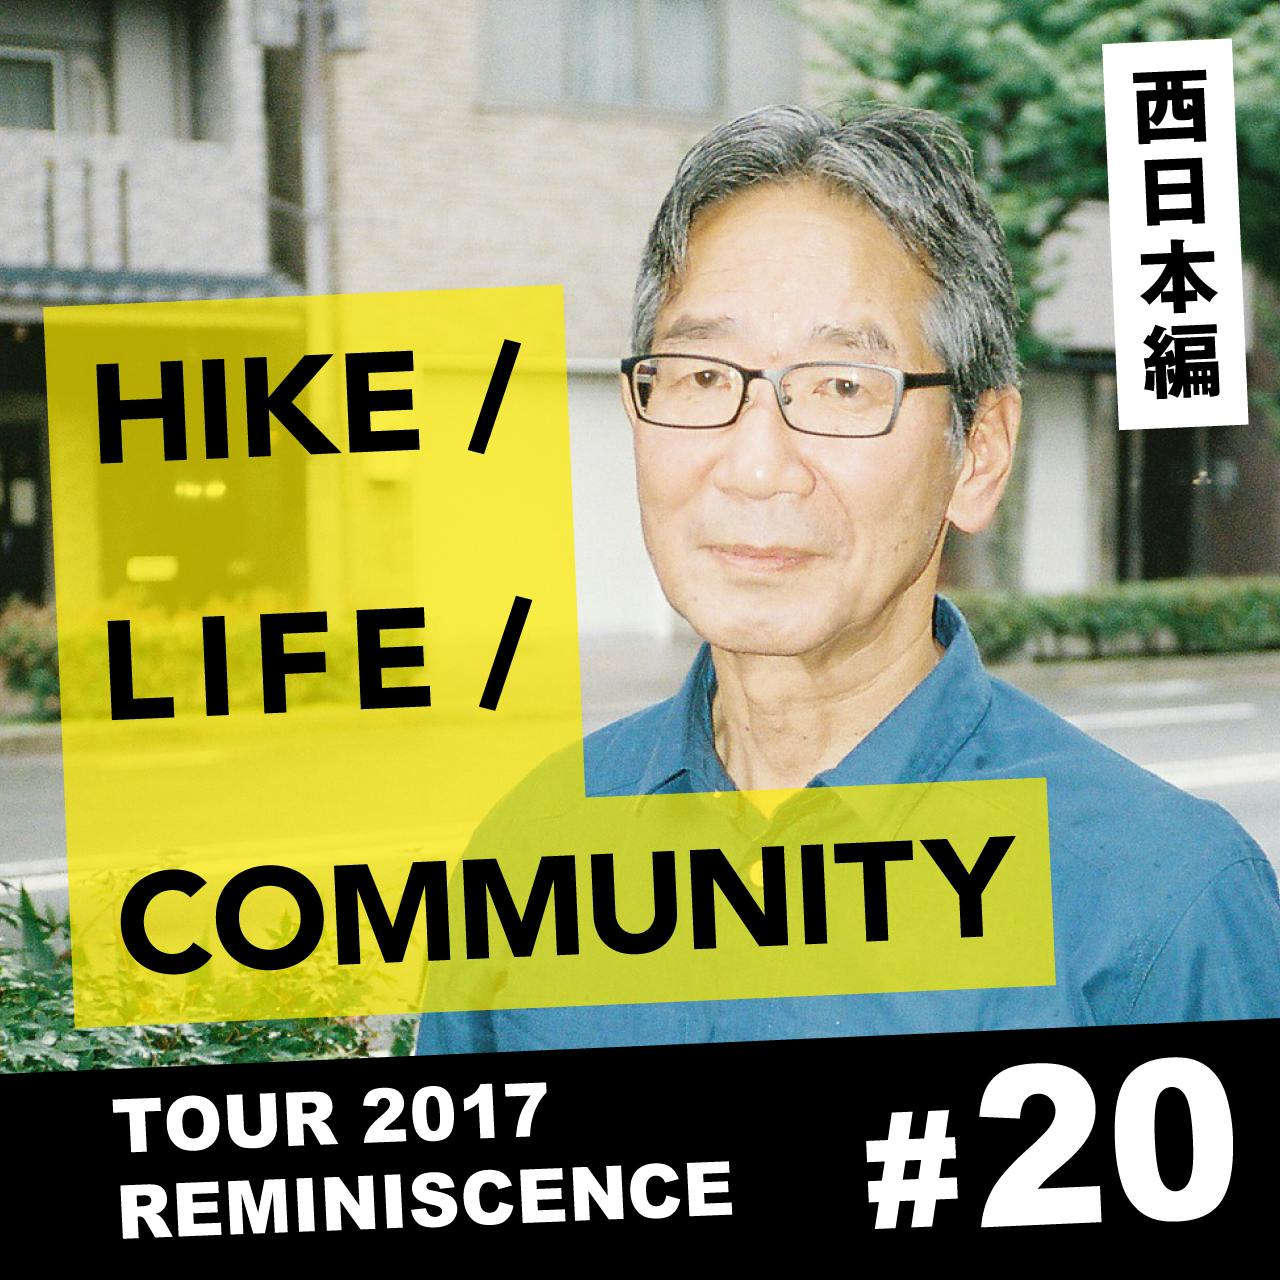 HIKE / LIFE / COMMUNITY TOUR 2017 REMINISCENCE #20 草川啓三